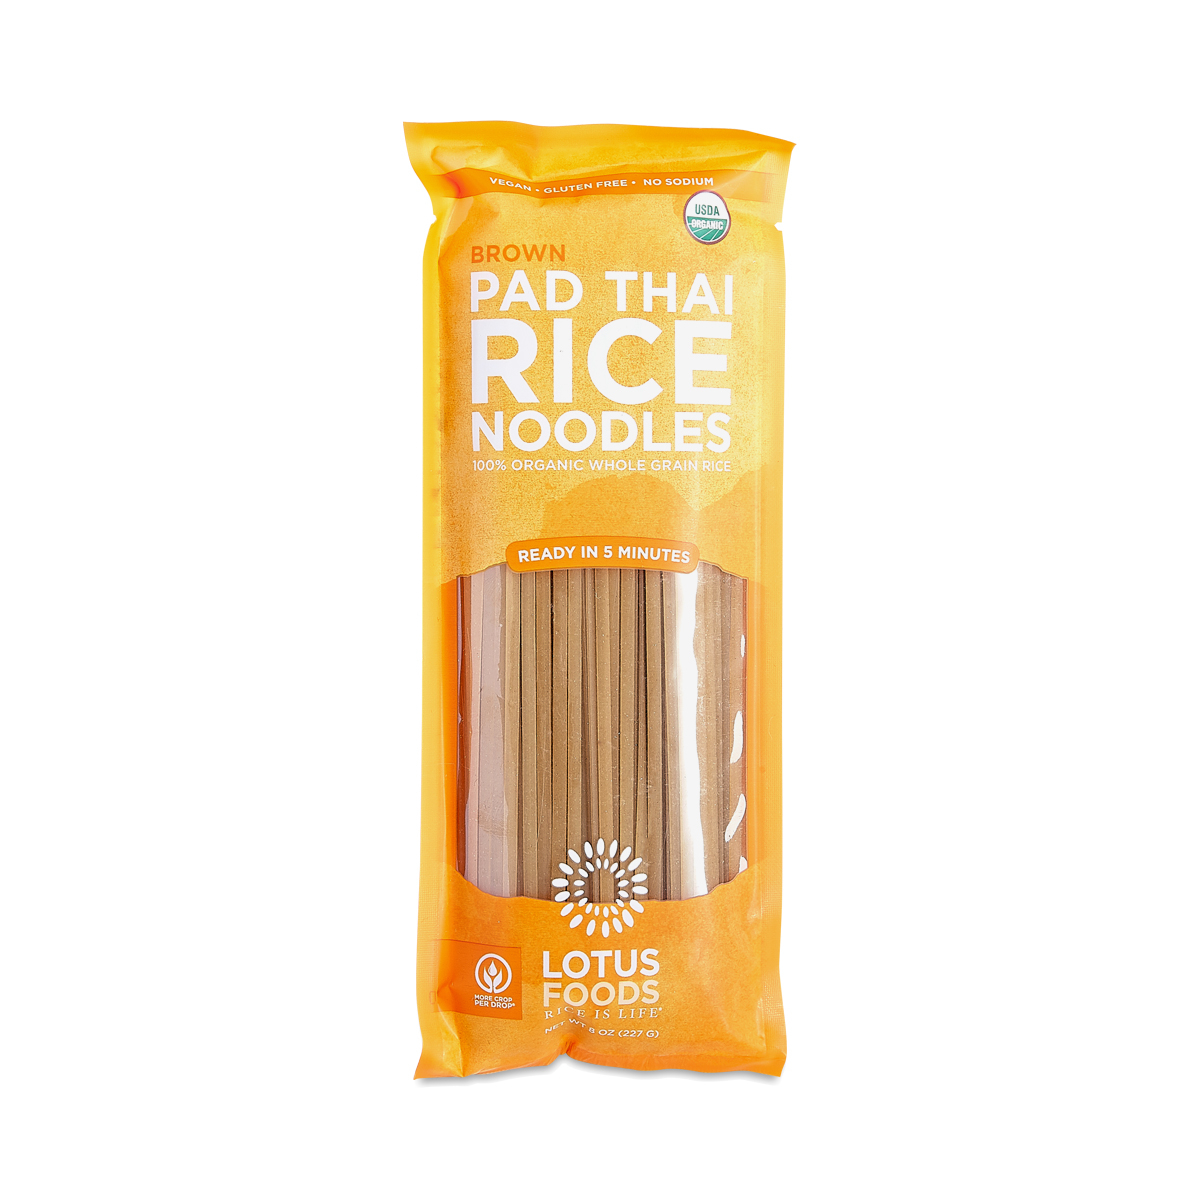 Lotus Foods Brown Pad Thai Rice Noodles 8 oz bag